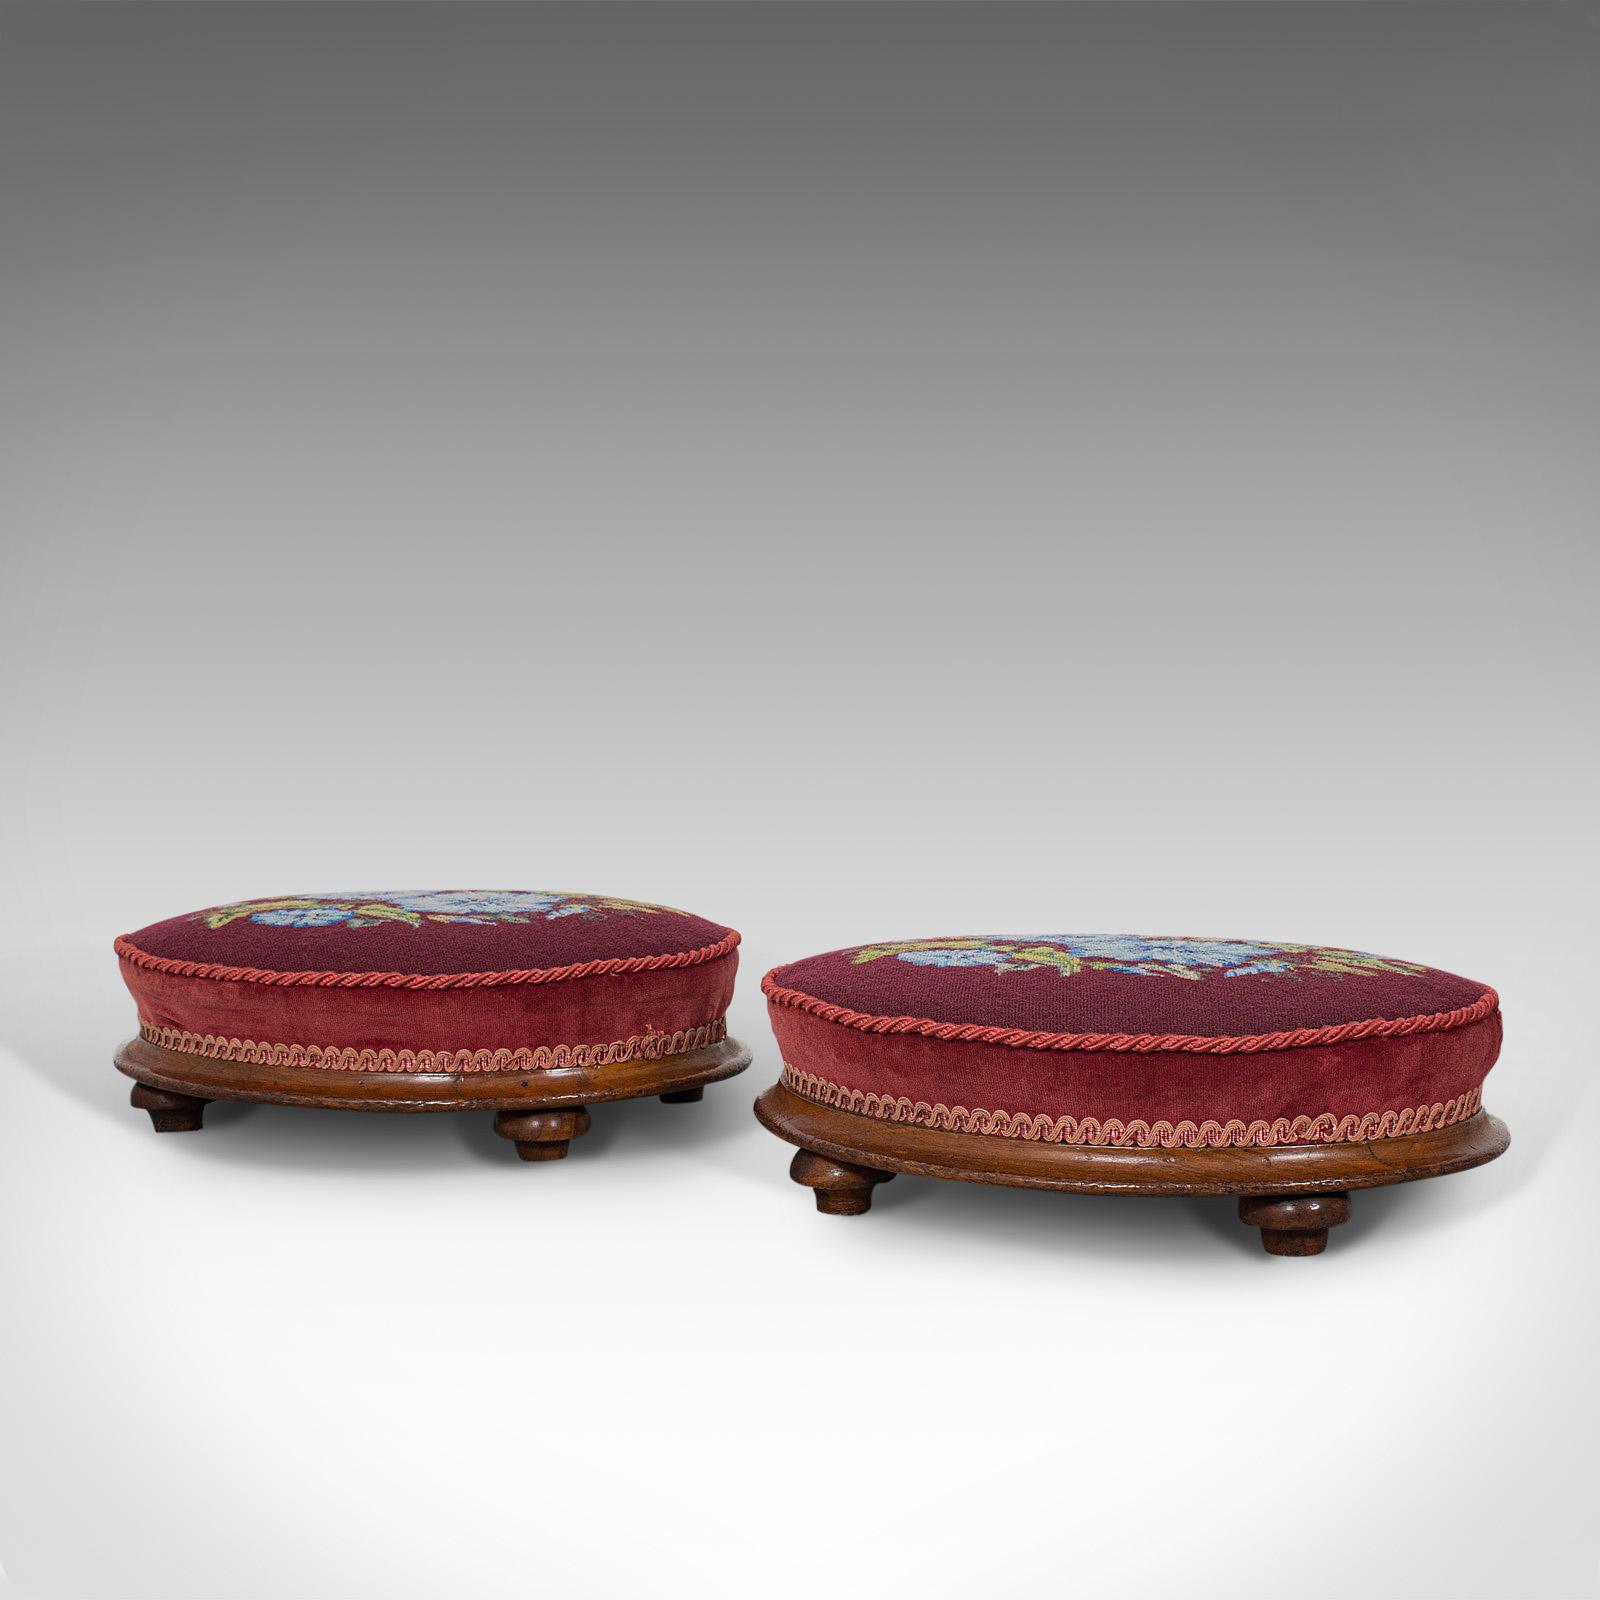 British Pair of Antique Footstools, English, Walnut, Needlepoint, Rest, Victorian